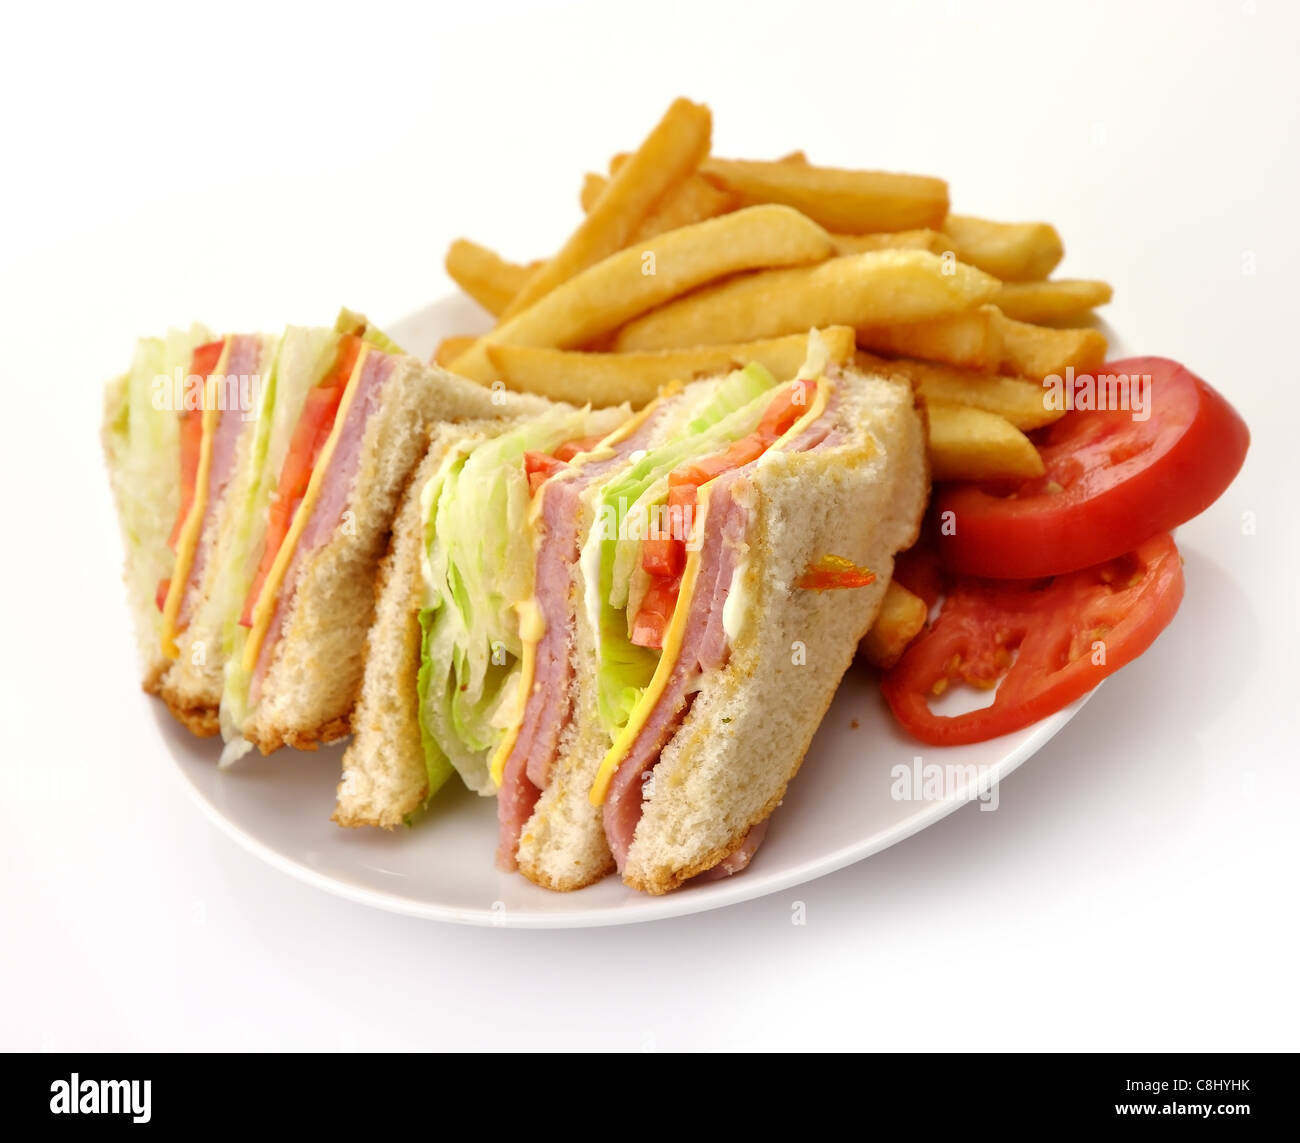 Turkey Or Ham Club Sandwich And French Fries Stock Photo